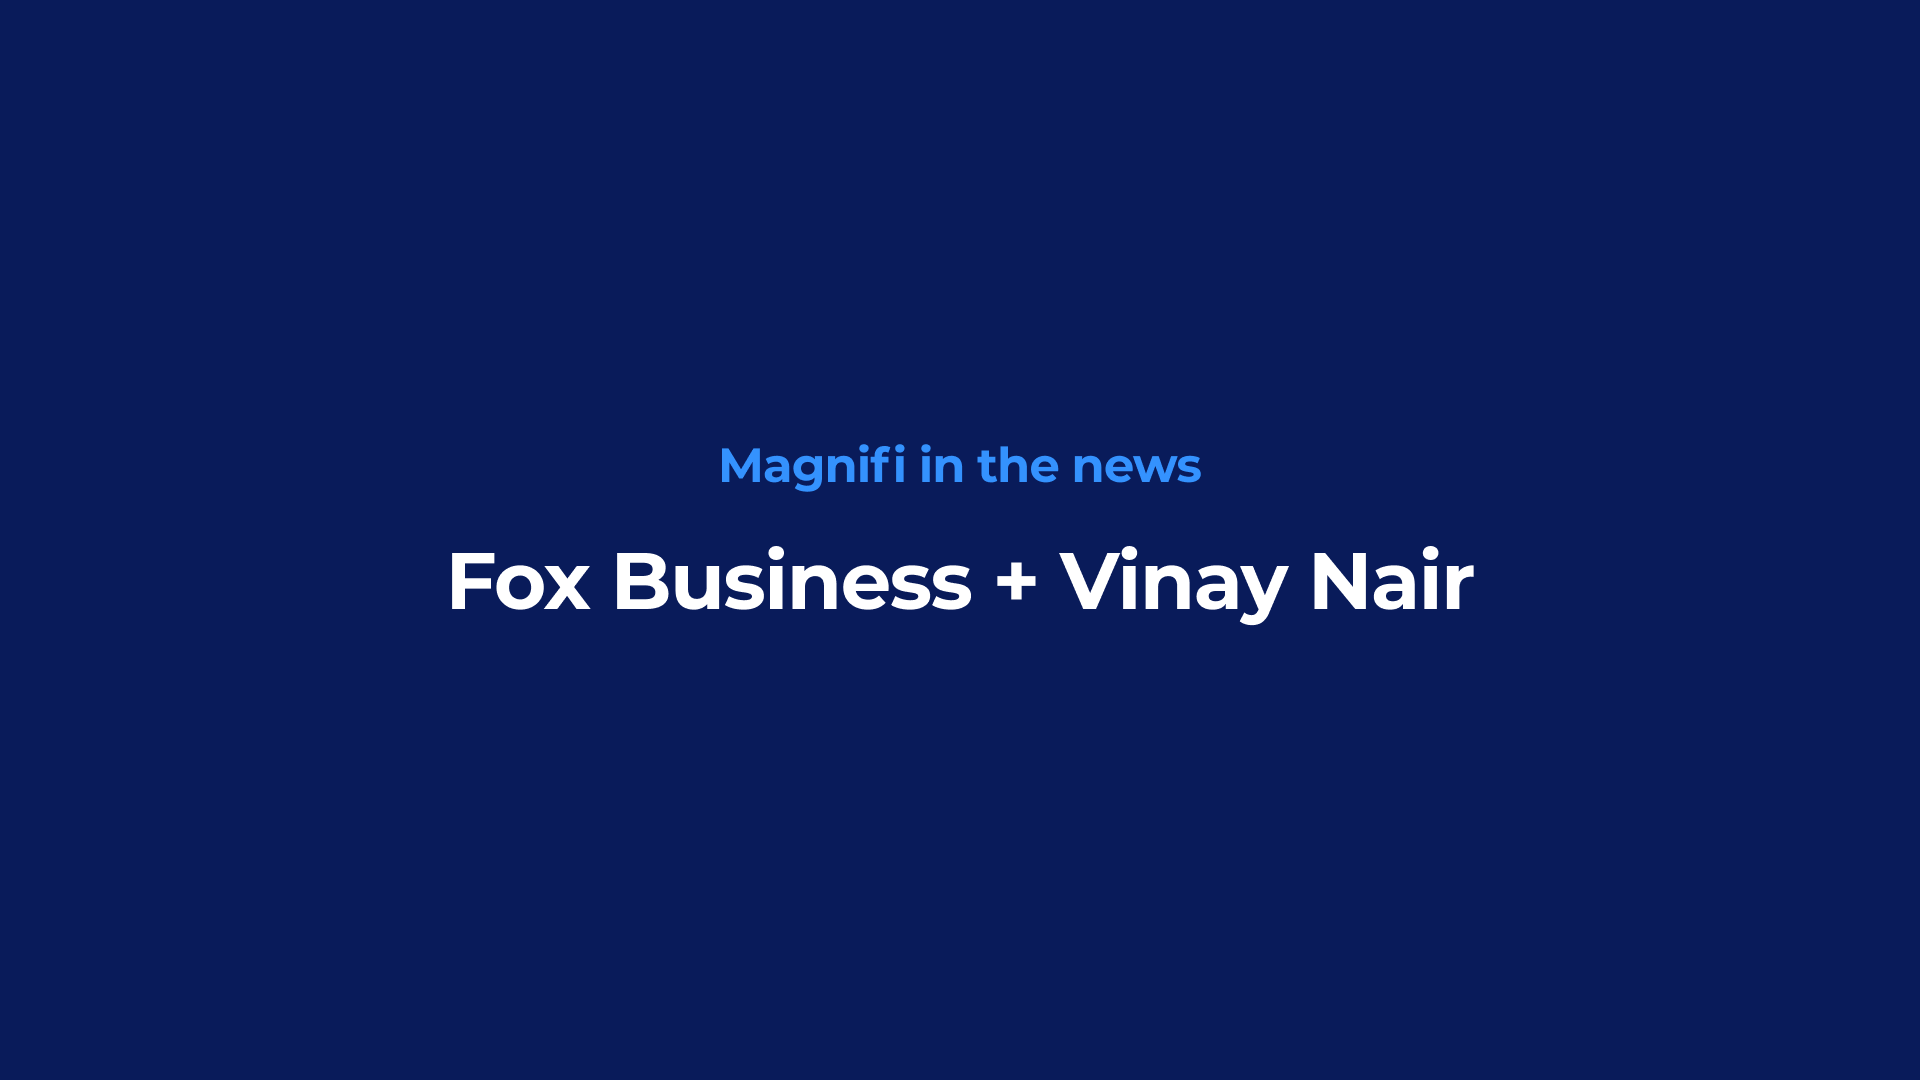 Magnifi in the news
Fox Business + Vinay Nair